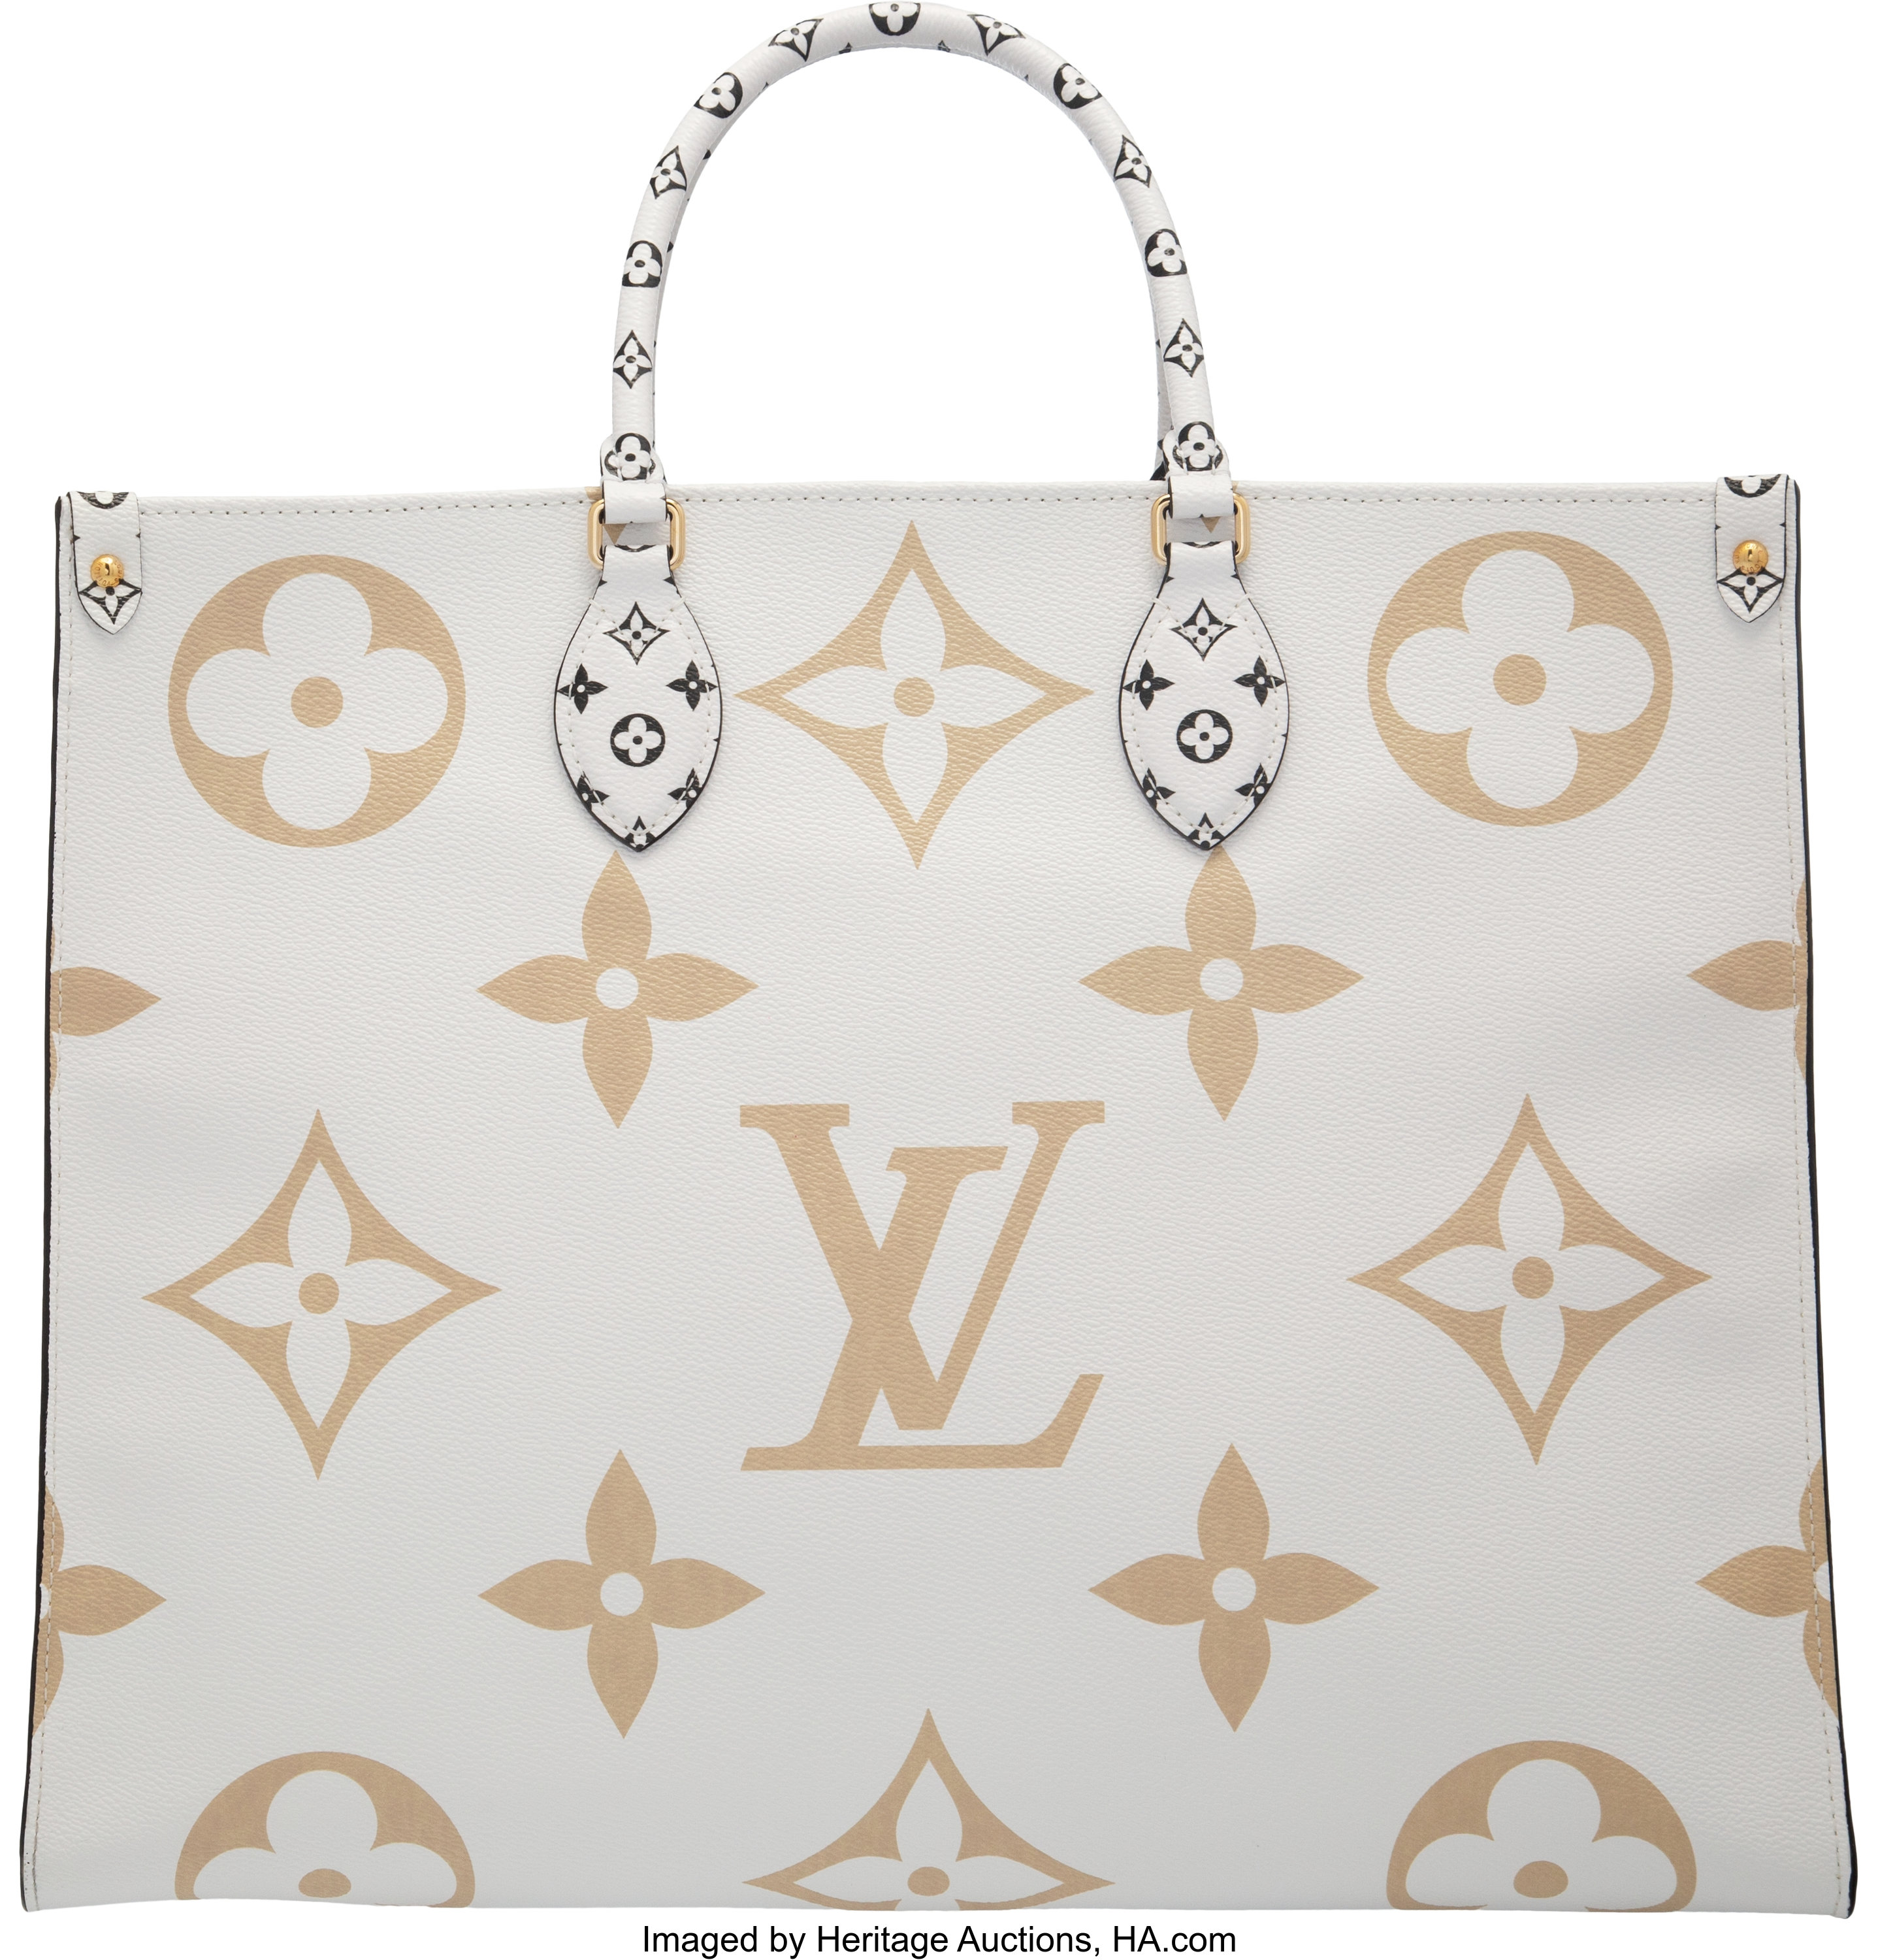 At Auction: Louis Vuitton, Louis Vuitton - NEW - On the go MM